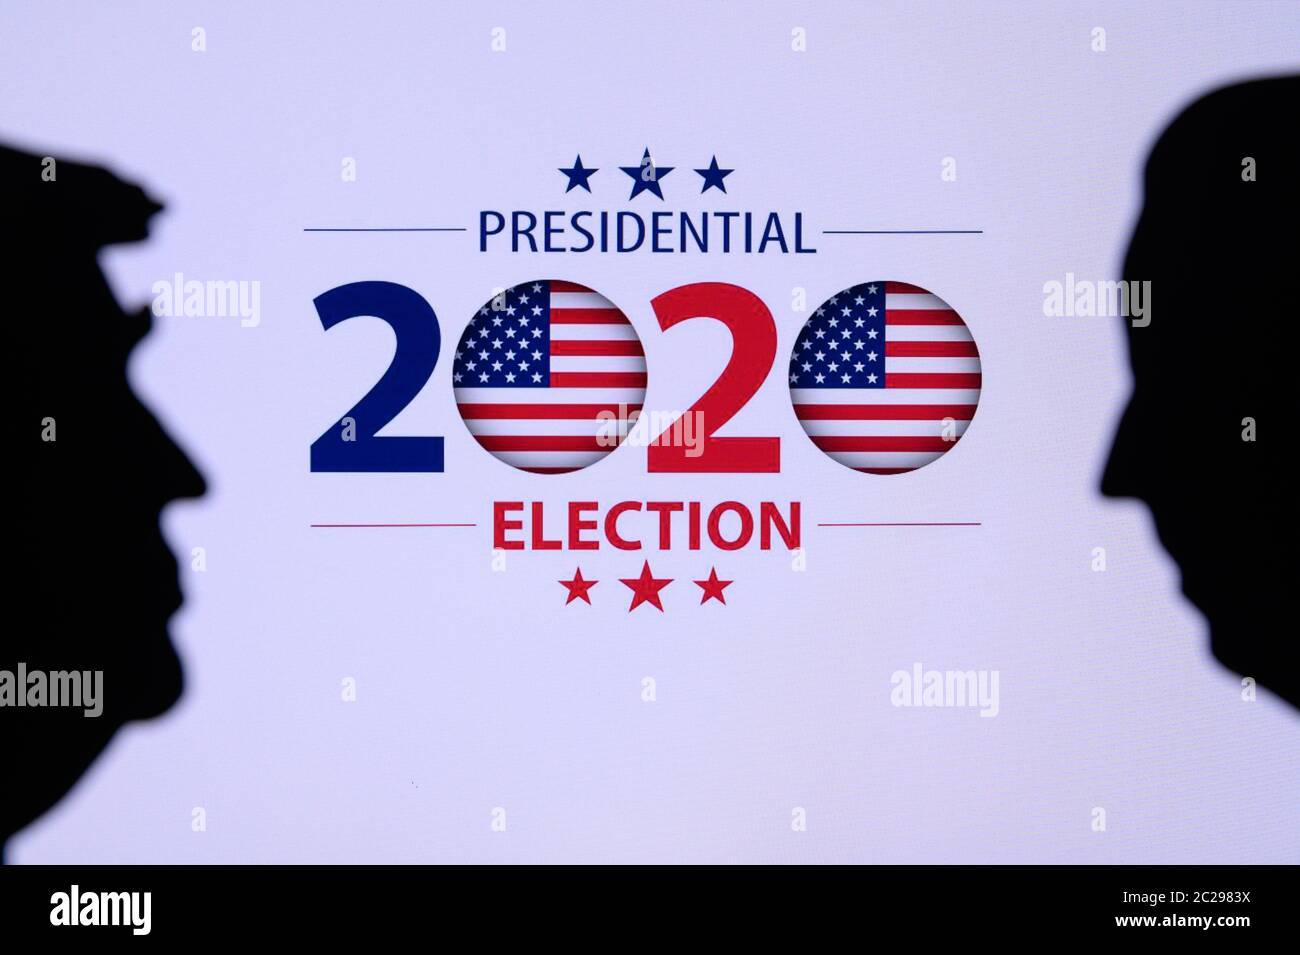 NEW YORK, USA, JUN 17, 2020: Silhouette of republican candidate Donald Trump and democratic candidate Joe Biden. 2020 United States presidential elect Stock Photo